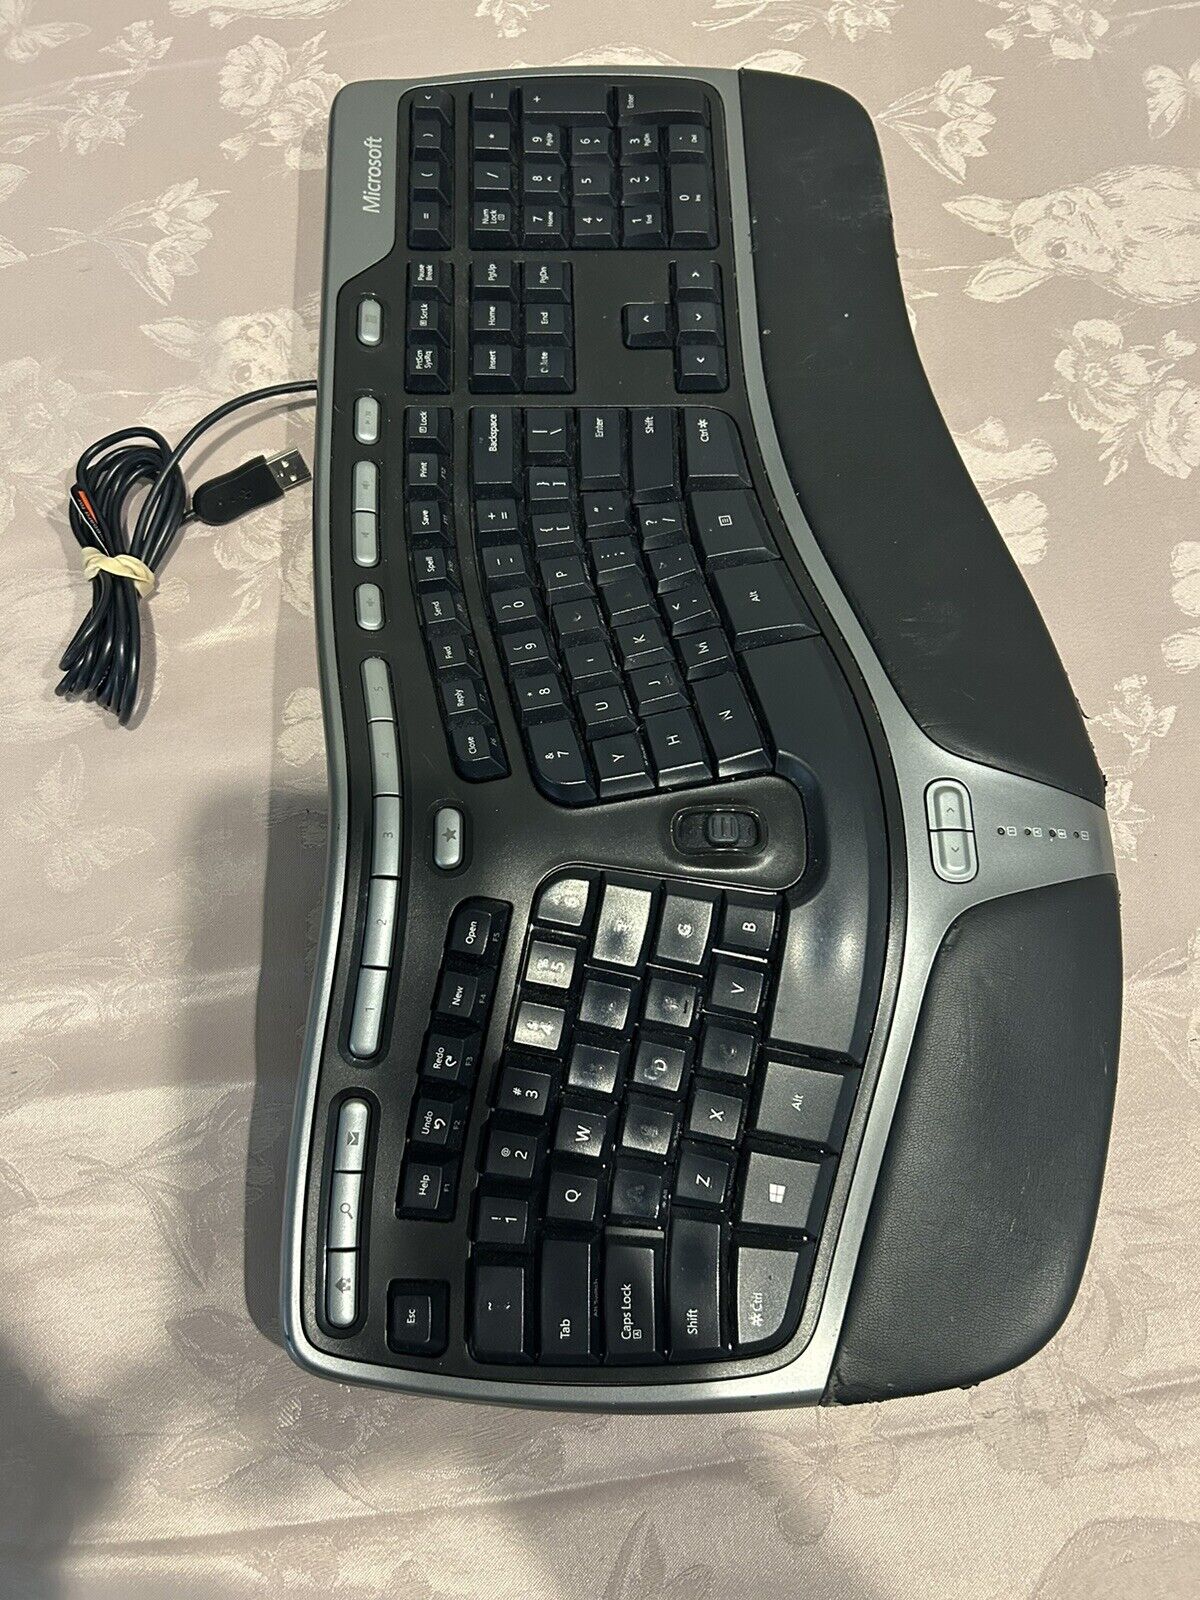 Microsoft Natural Ergonomic Keyboard 4000 v1.0 KU-0462 USB Wired, Good Condition